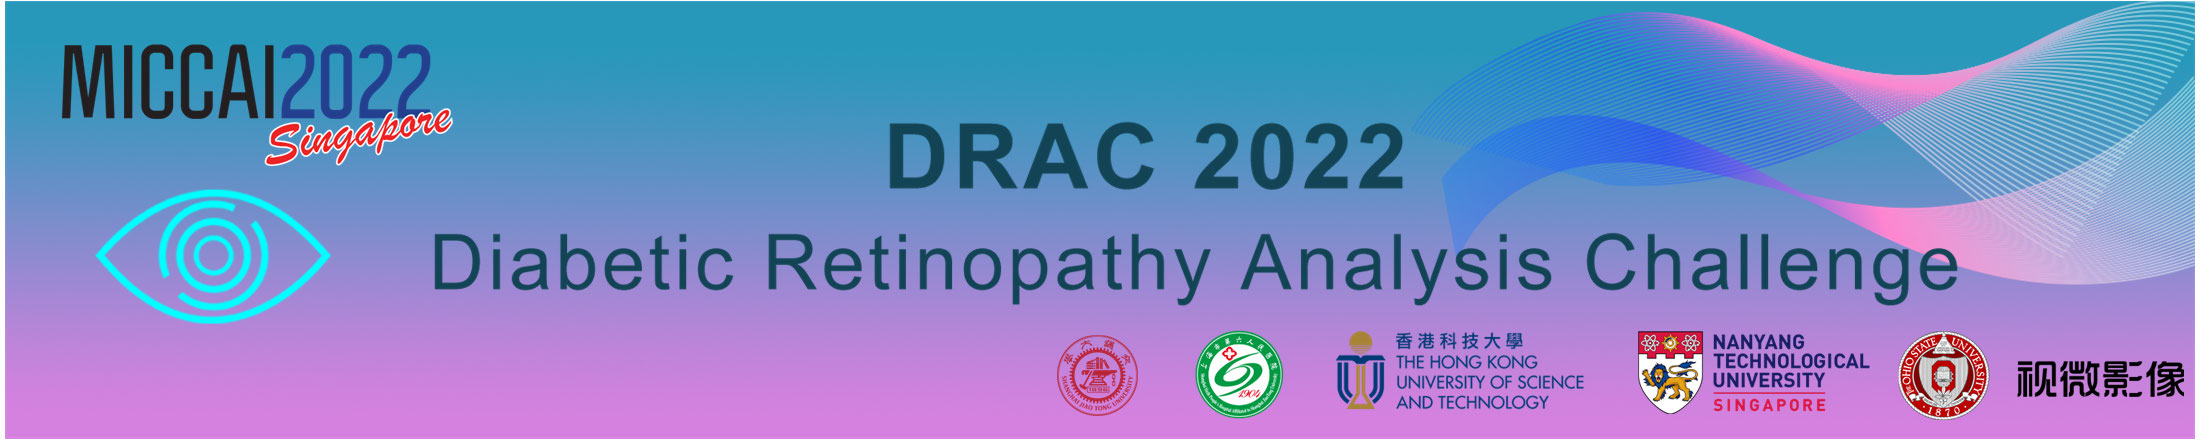 Diabetic Retinopathy Analysis Challenge MICCAI2022 Banner